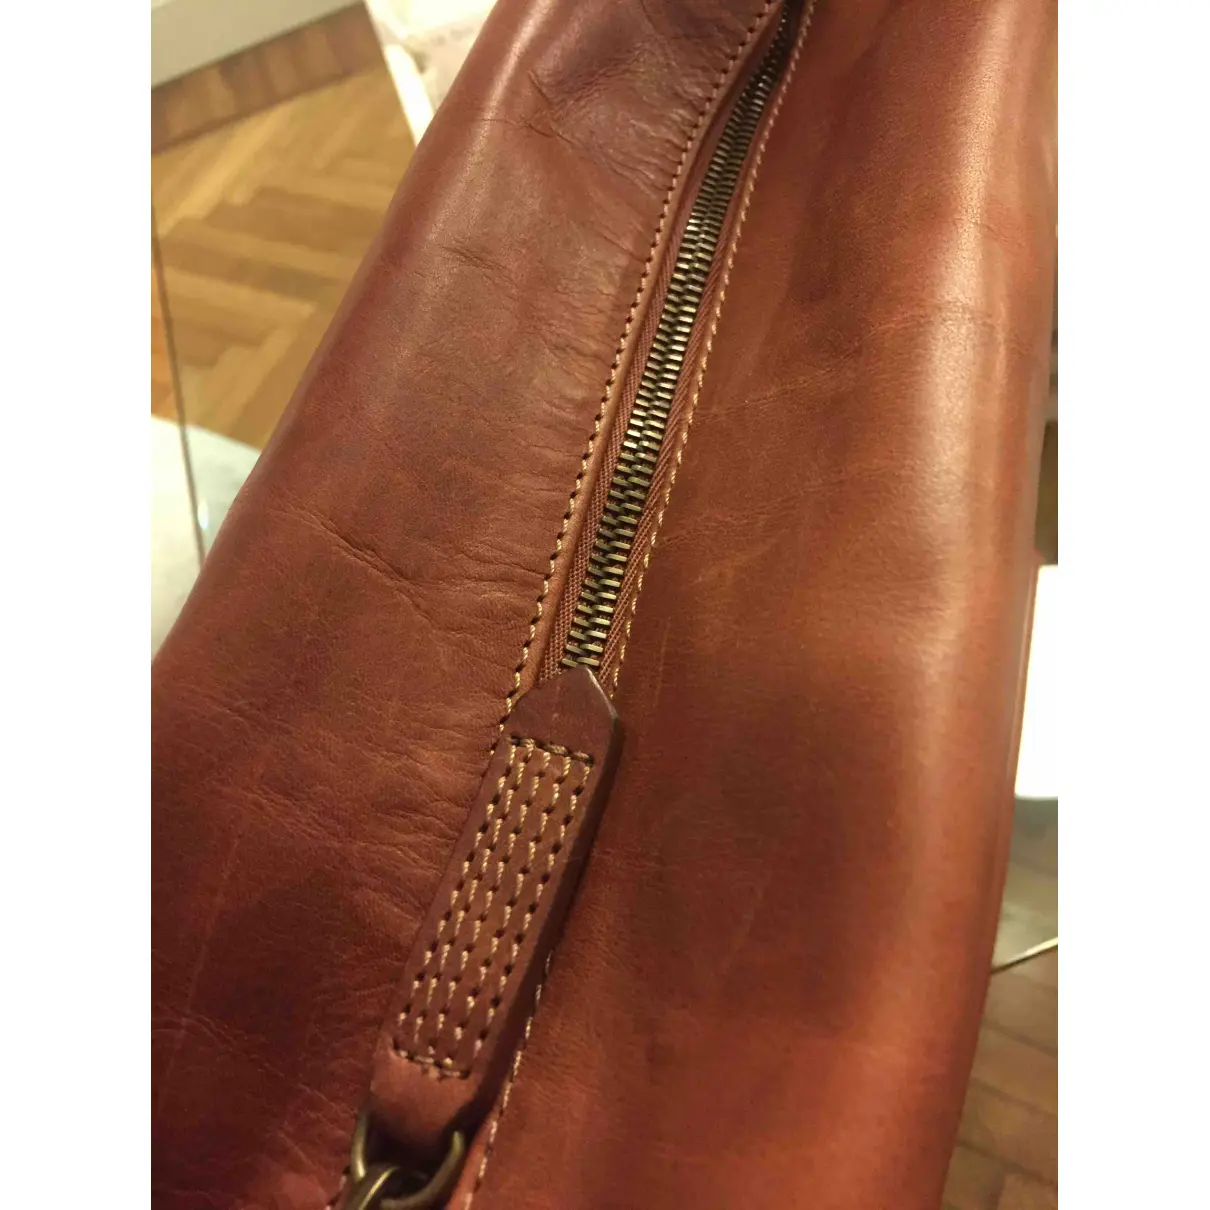 Buy Timberland Leather handbag online